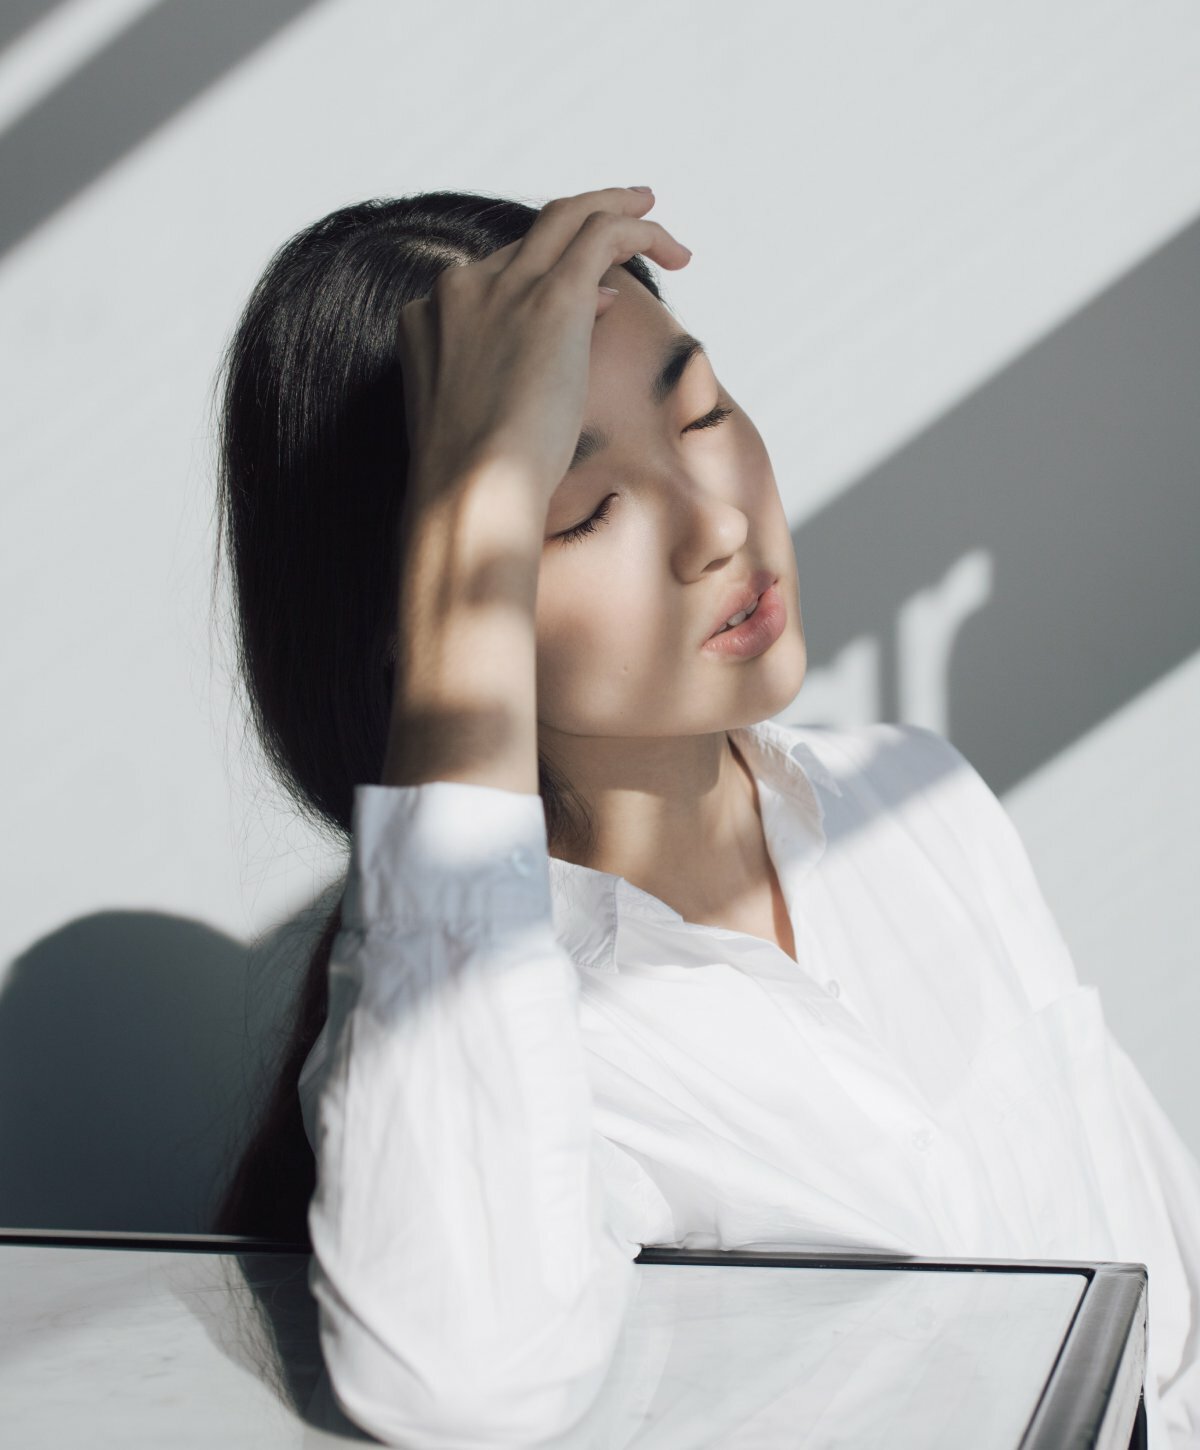 New York Belotero model wearing a white blouse